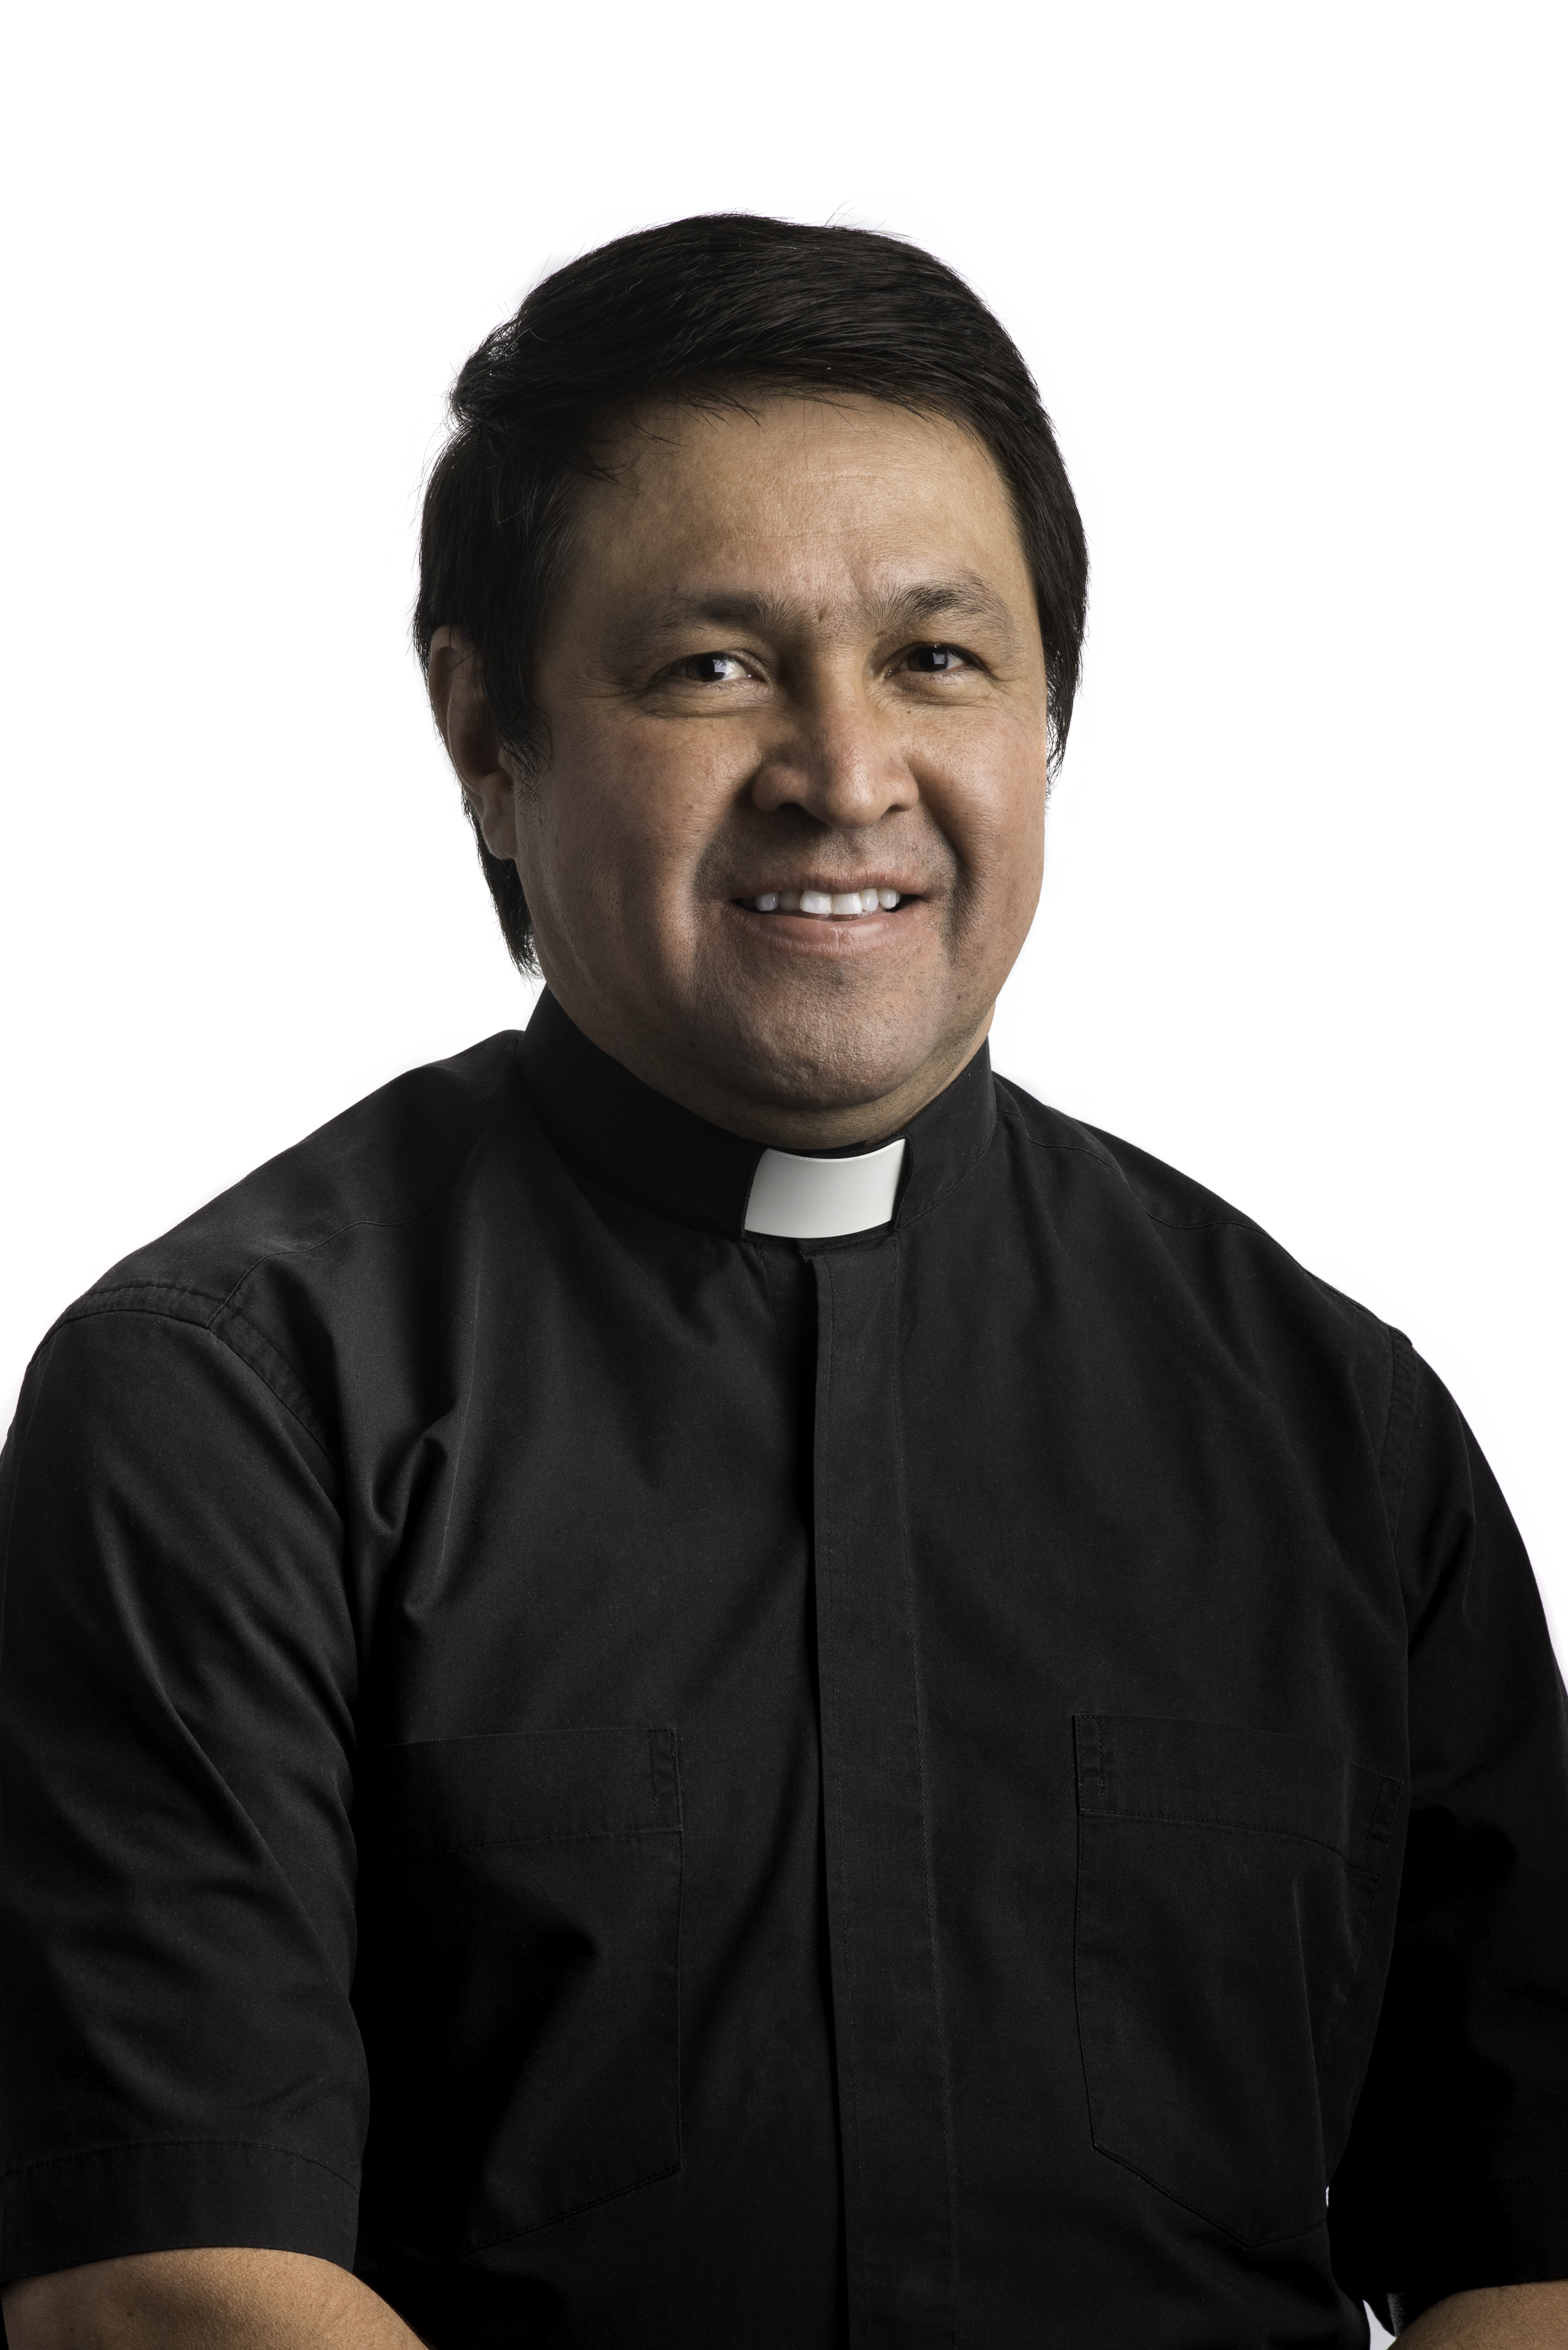 Rev. Jose Fidel Barrera-Cruz